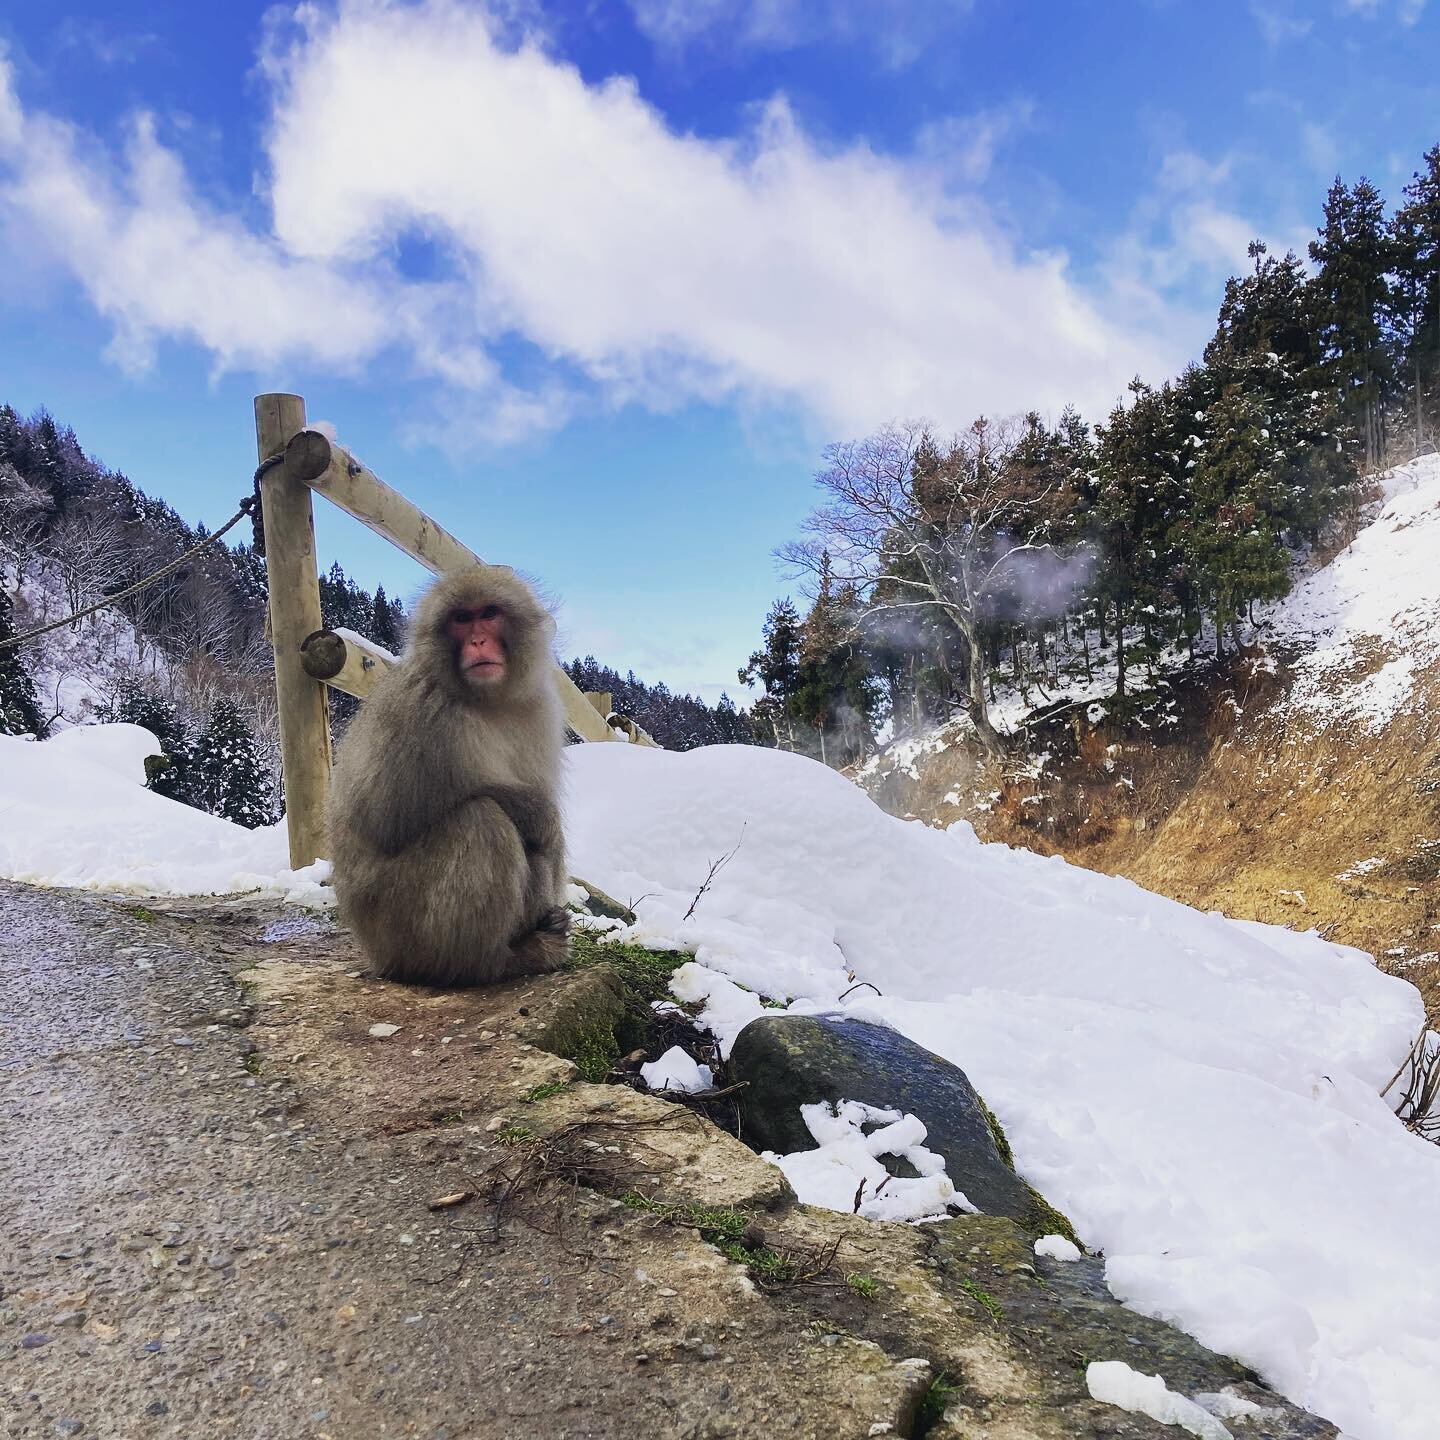 Supermodel monkeys 🐒

Join our Snow Monkey Tour on 
http://www.snowmonkeytour.com/
.
#snowmonkey 
#snowmonkeytour
#snowmonkeypark 
#白馬村 #信州 #旅行 #冬旅 #長野県観光 #旅行好きな人と繋がりたい #❄️ #スキーすきな人と繋がりたい #スノボすきな人と繋がりたい #skiholiday #japow #hakuba #hakubavalley #inst